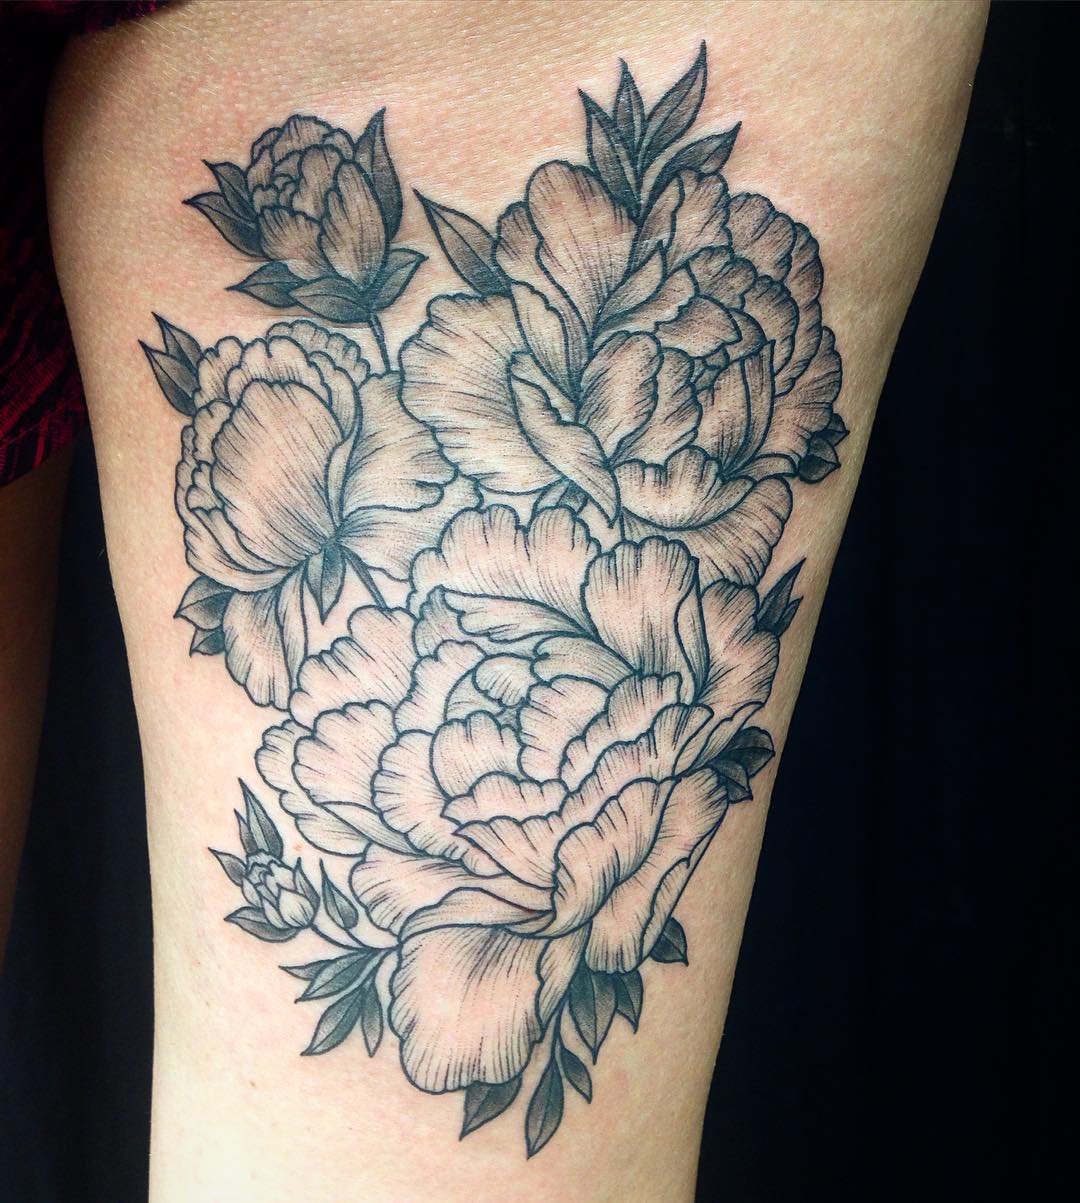 First one down @royaltattoodk - back o' leg 
#tattoo#tattooing#tatovering #royal...